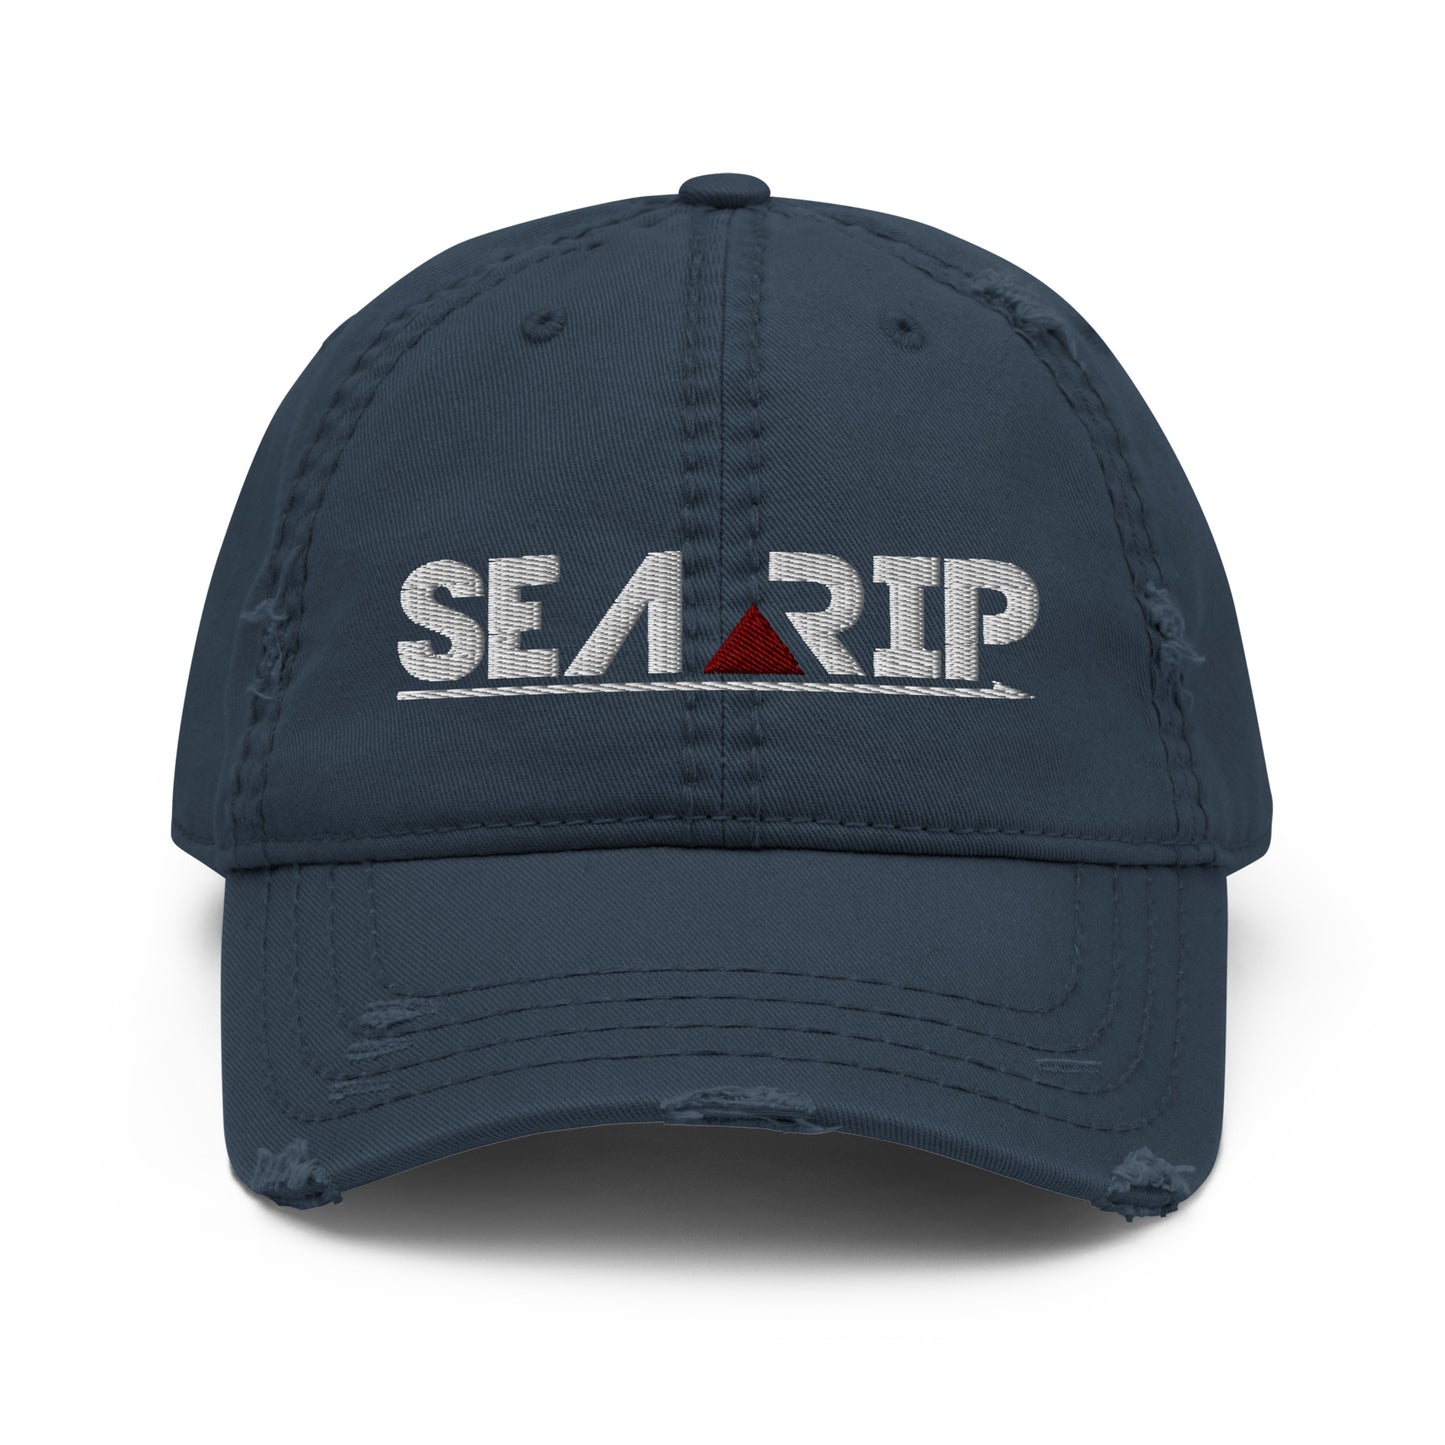 SEARIP Distressed Hat